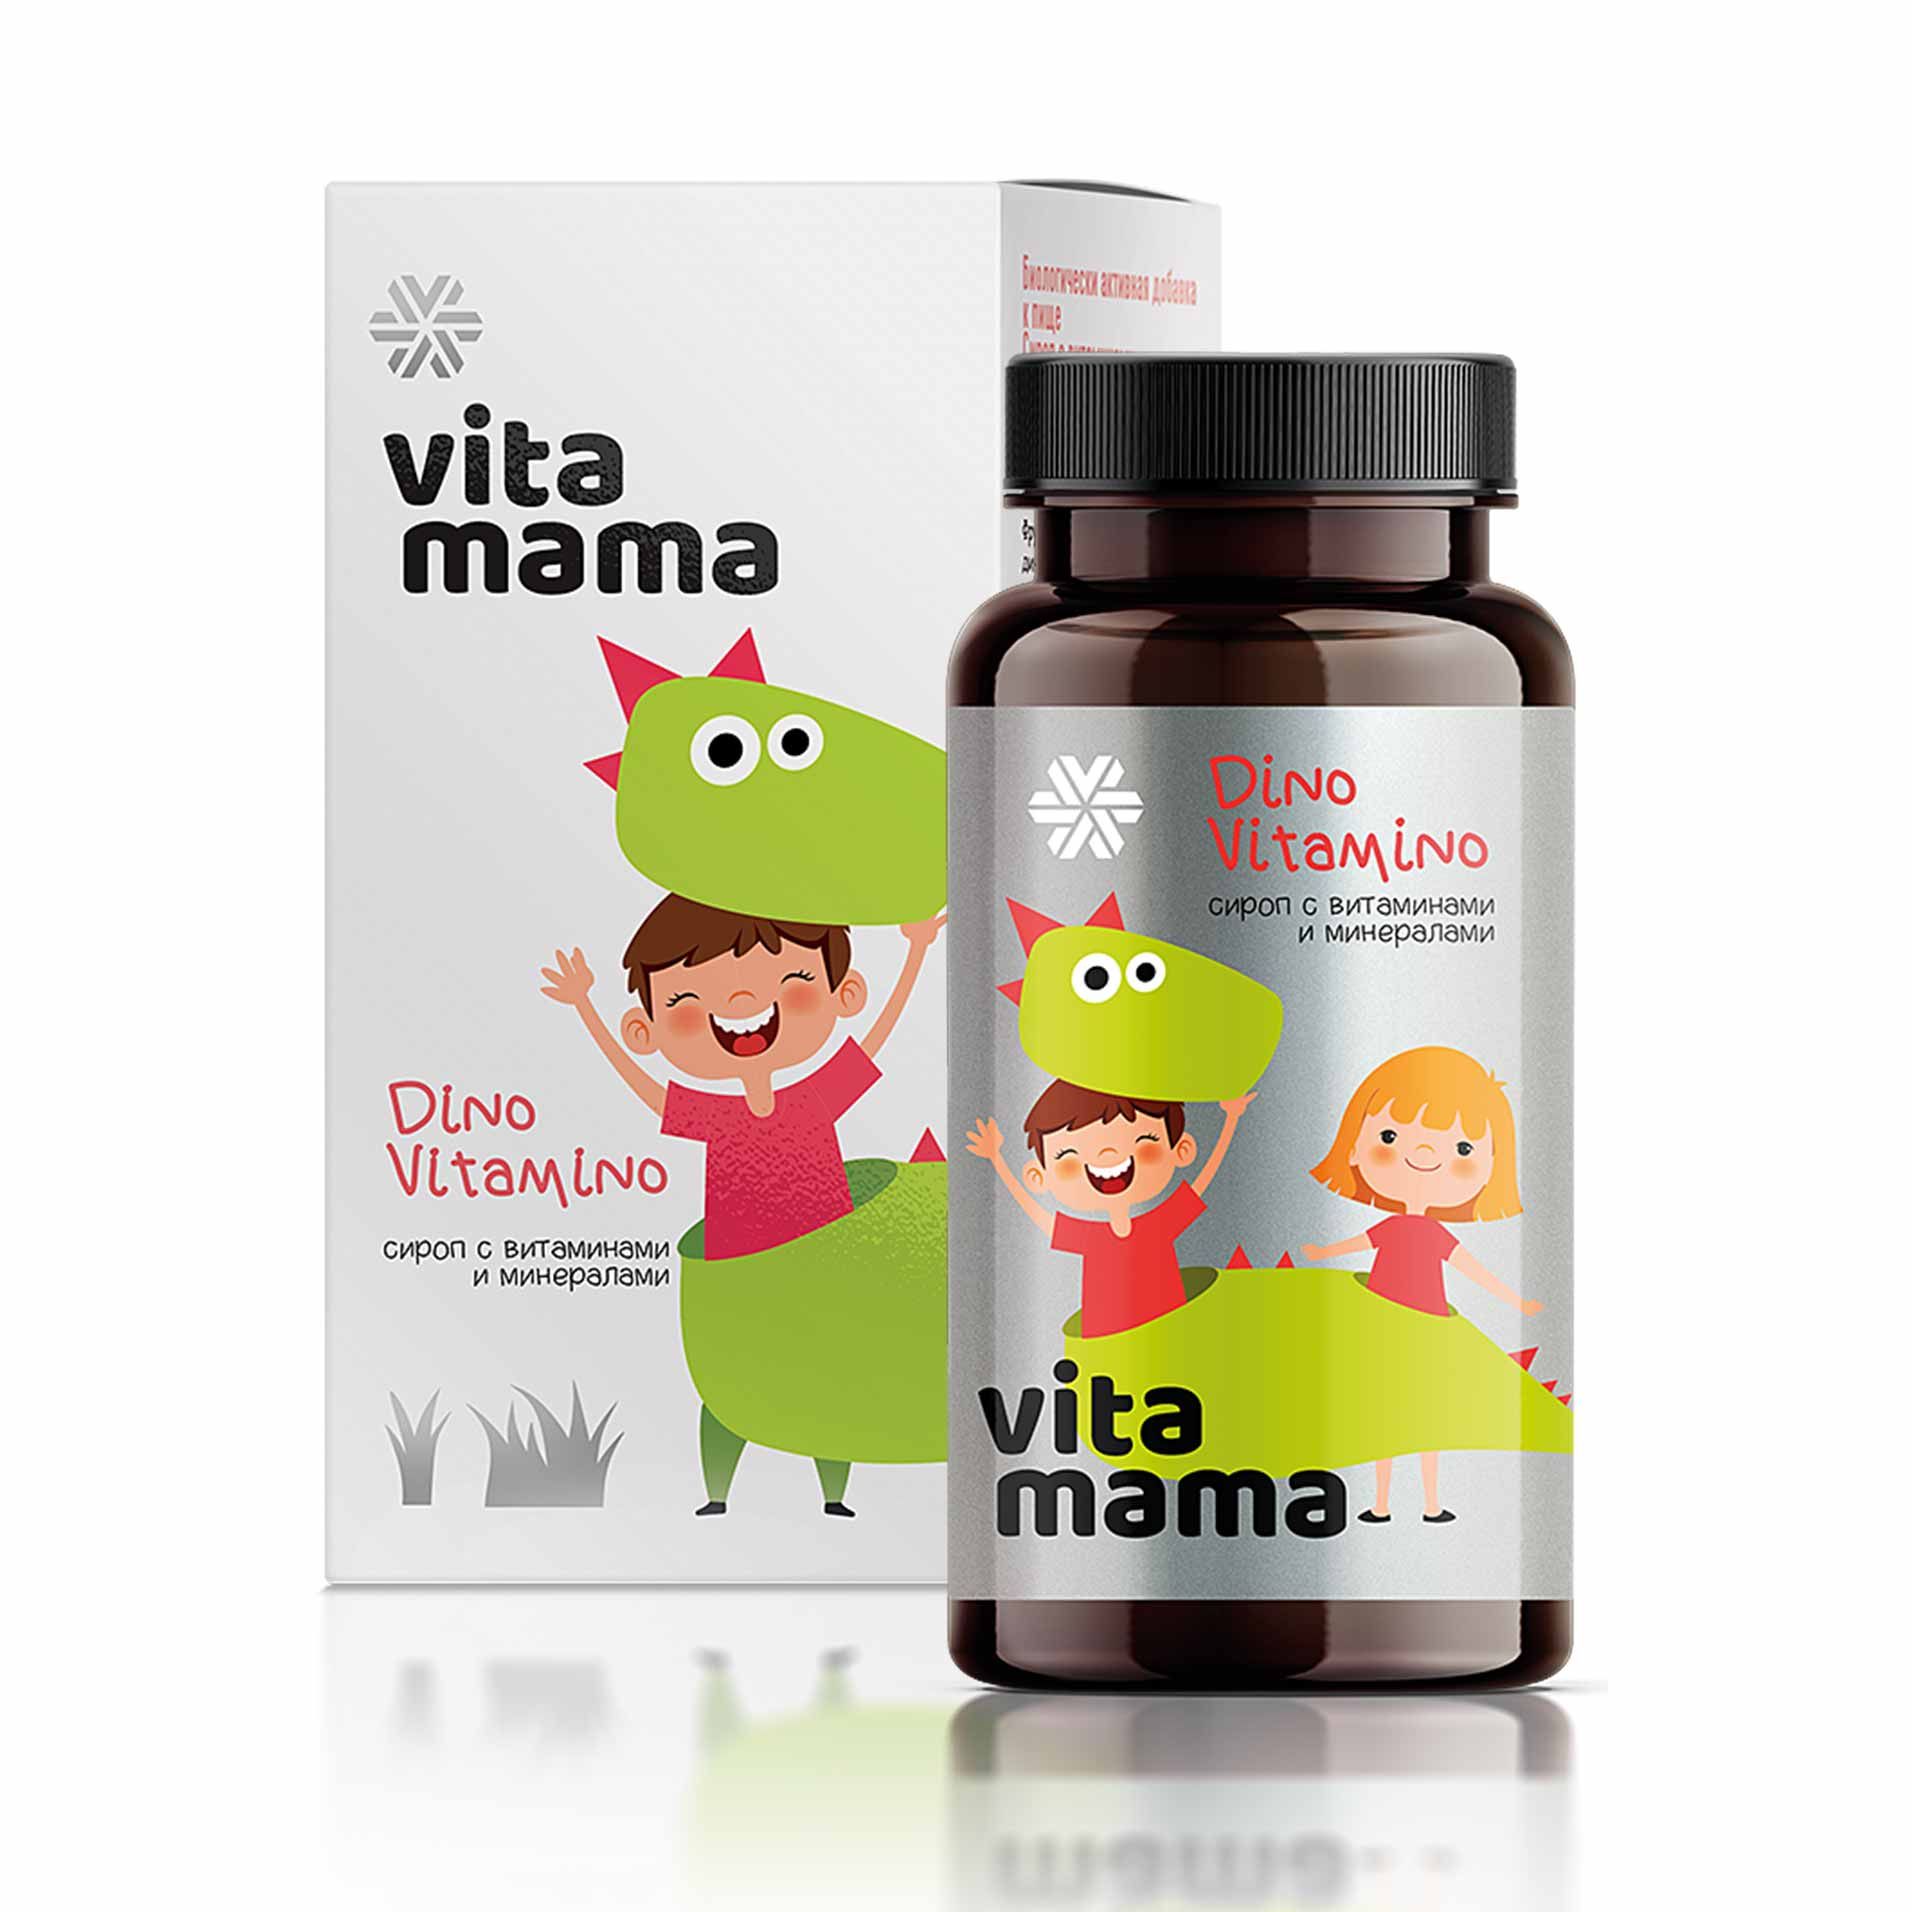 Vitamama - Dino Vitamino, сироп с витаминами и минералами